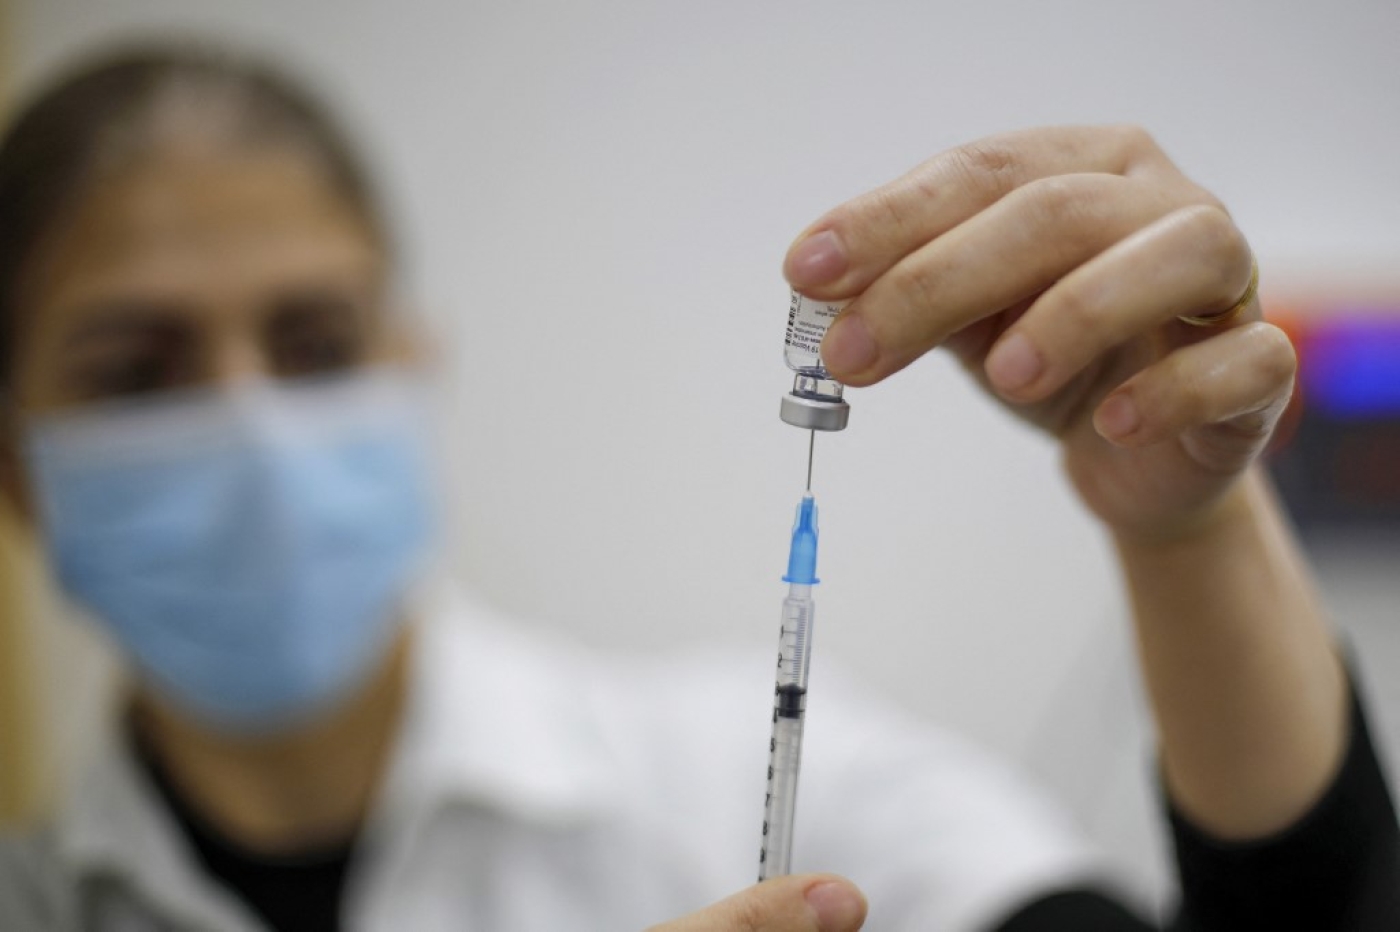 Israel has been accused of "vaccine apartheid" in the occupied Palestinian territories.